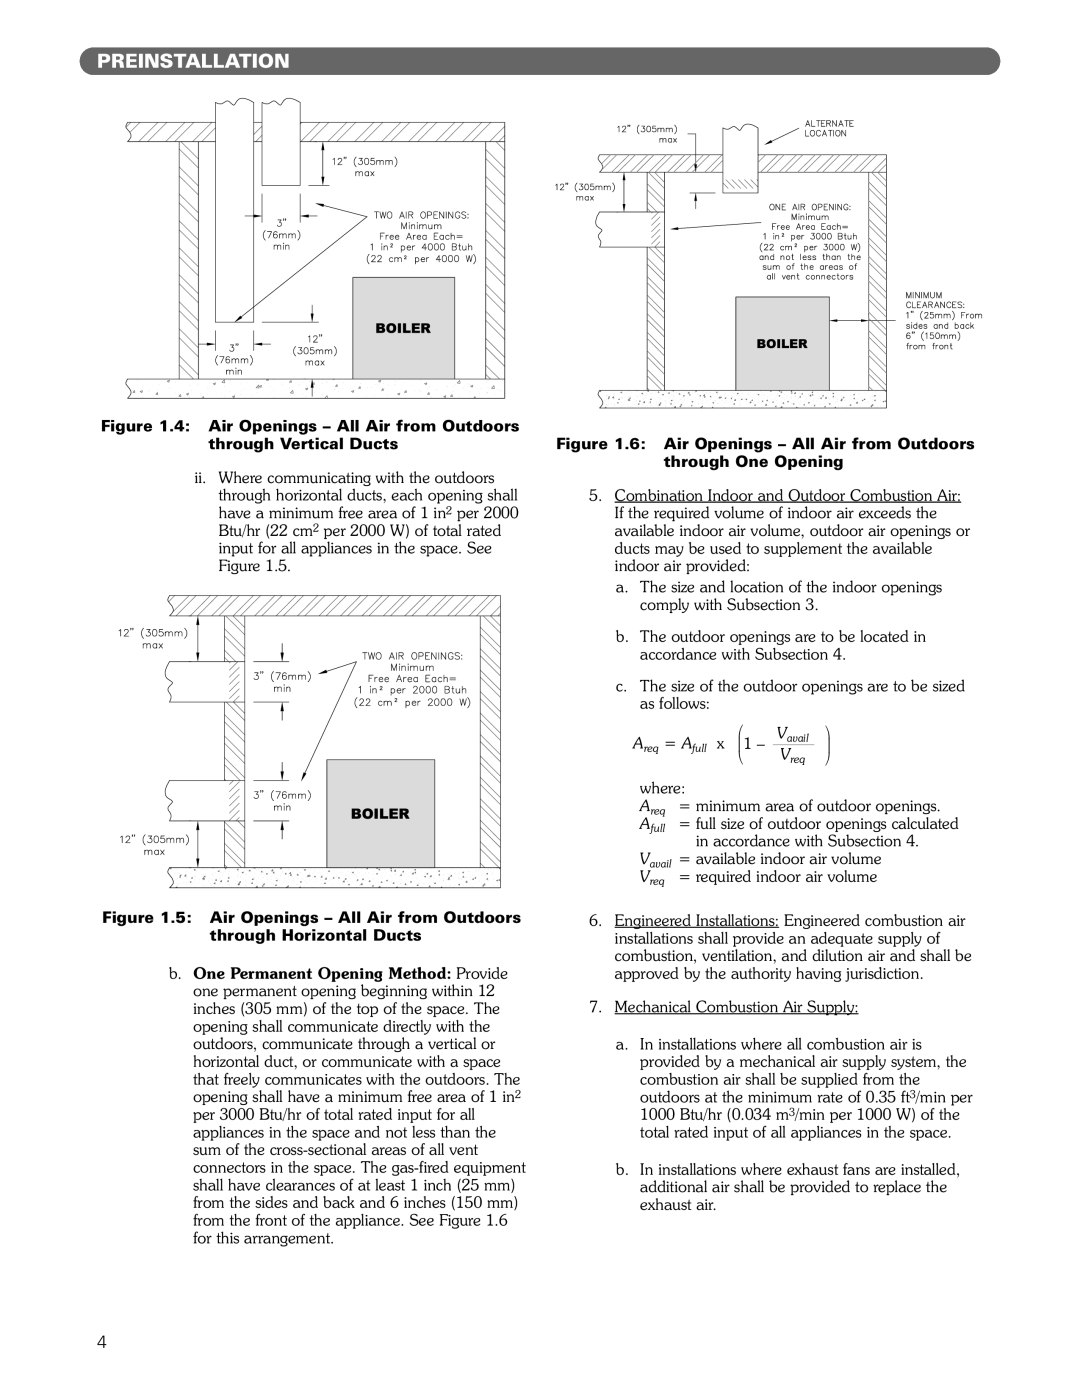 PB Heat MI/MIH series manual Preinstallation, where 